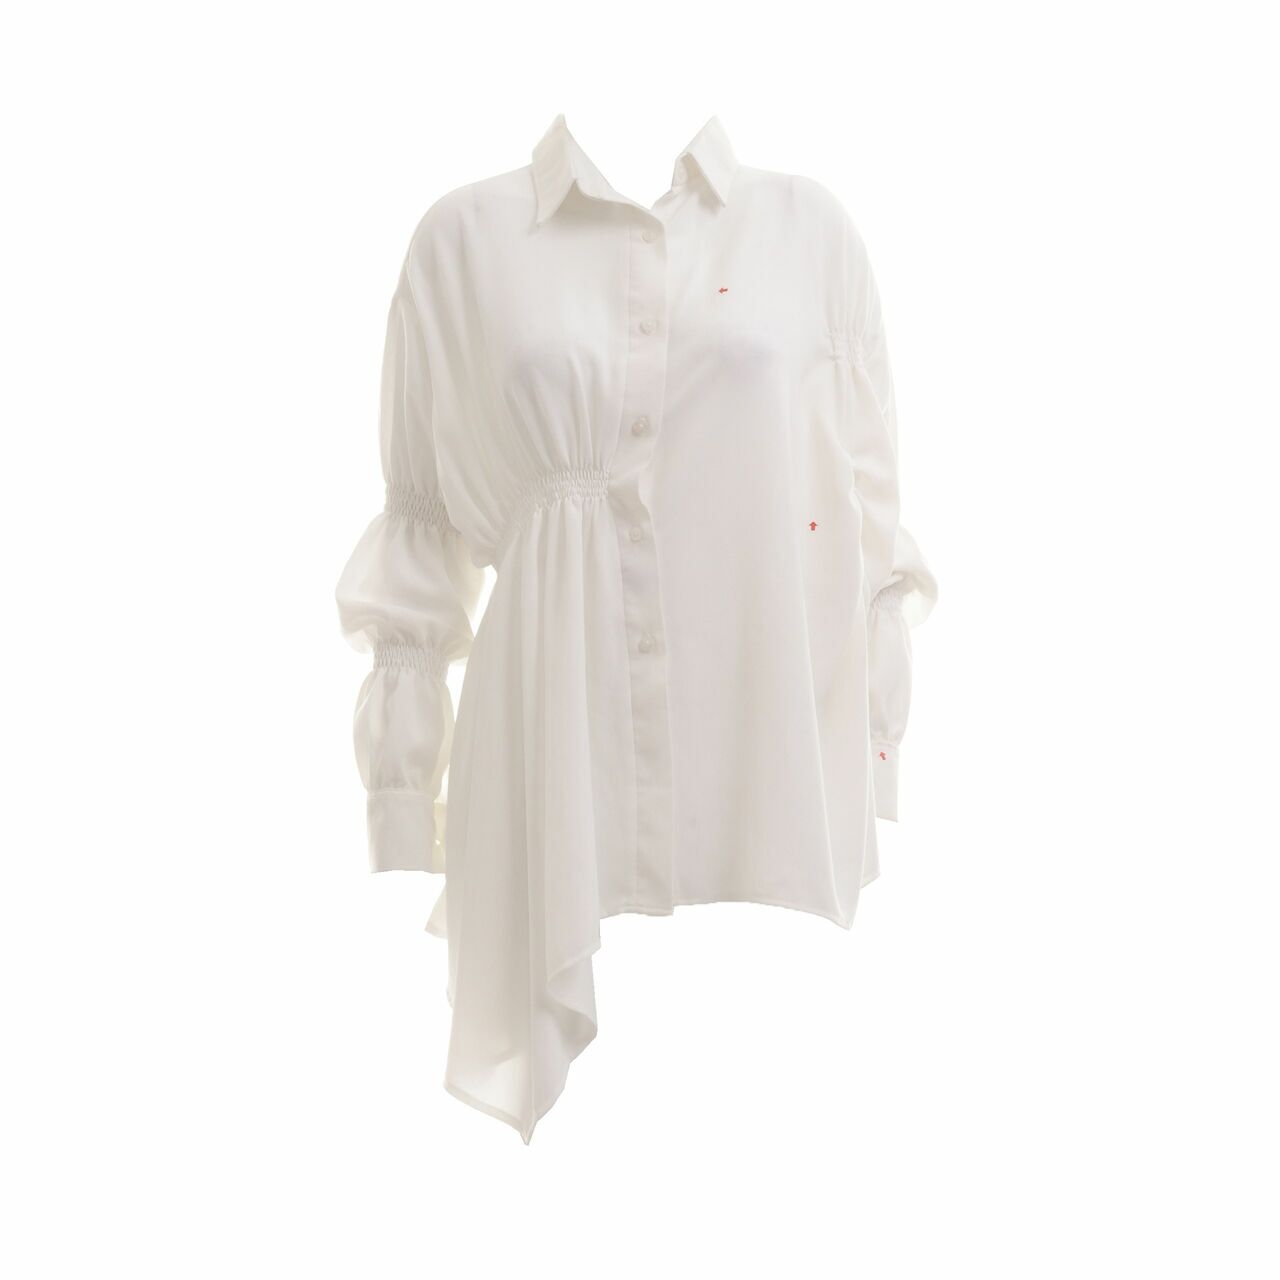 Duma White Shirt